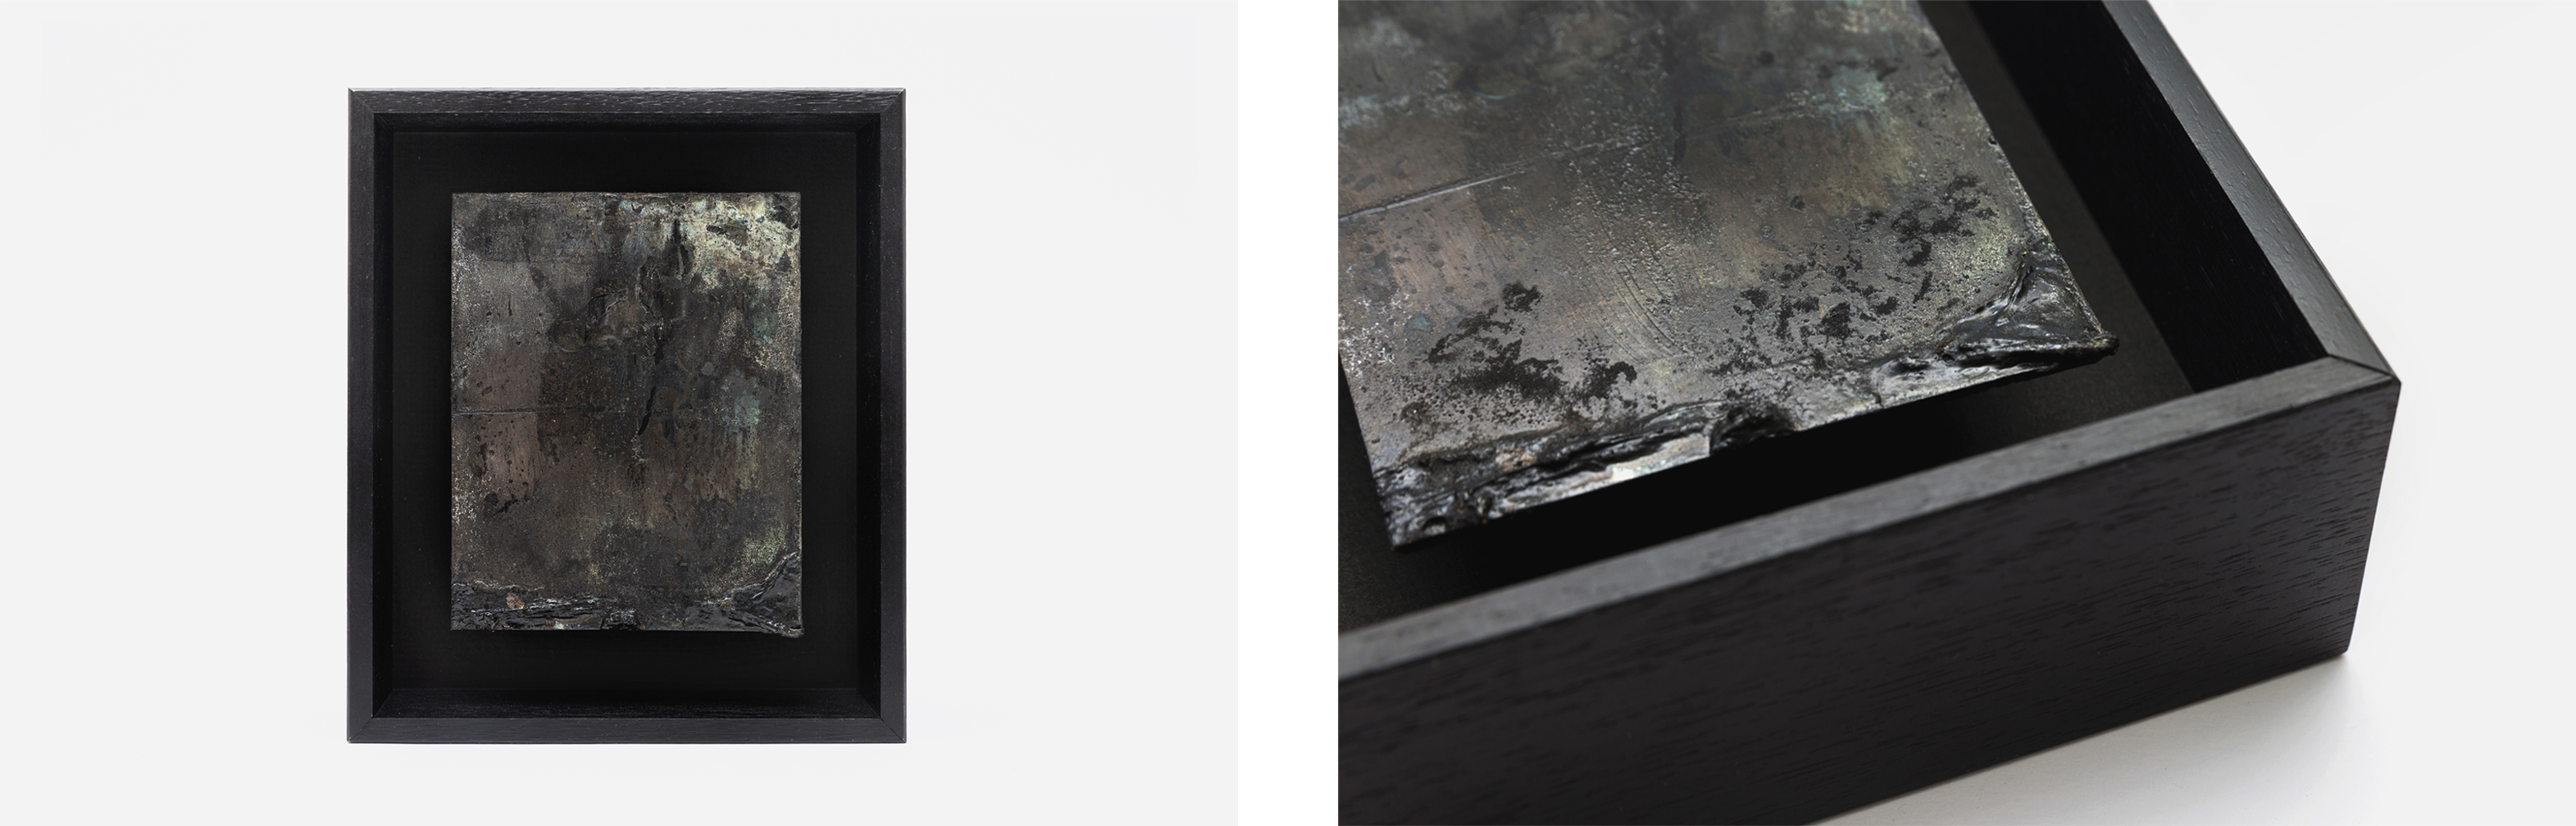 L - R: Darren Tanny Tan, 'Remnant', 2018, Photographic chemicals on plexiglass, framed, 15.5 x 18cm; 'Remnant' (detail), 2018. Images courtesy the artist.